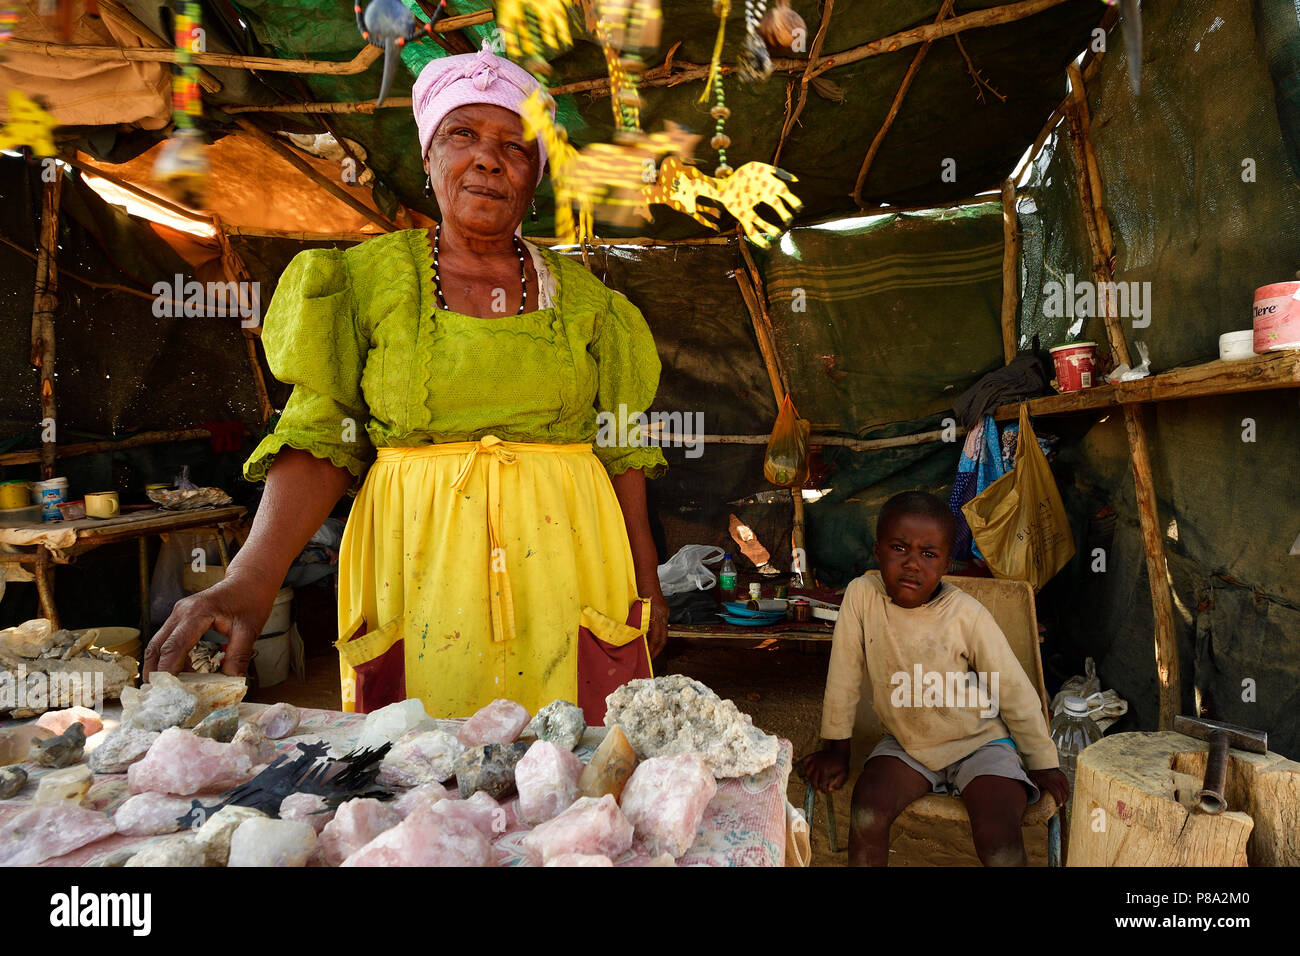 Vendedora local en su stand de ventas cerca de Spitzkoppe, región Erongo, Damaraland, Namibia Foto de stock